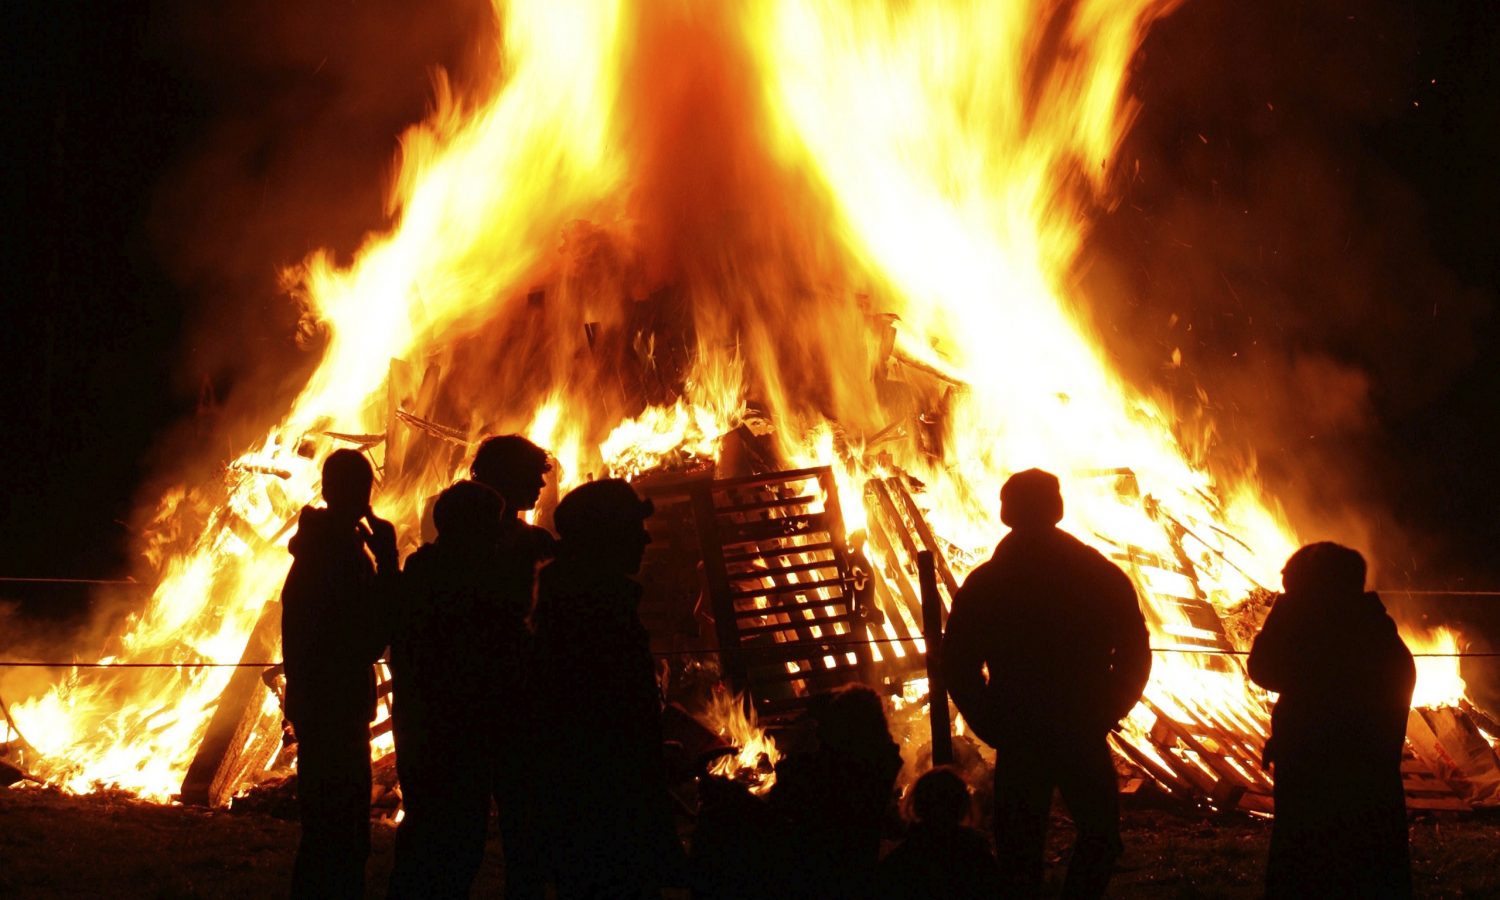 Can You Pass the British Citizenship Test? Bonfire night fire